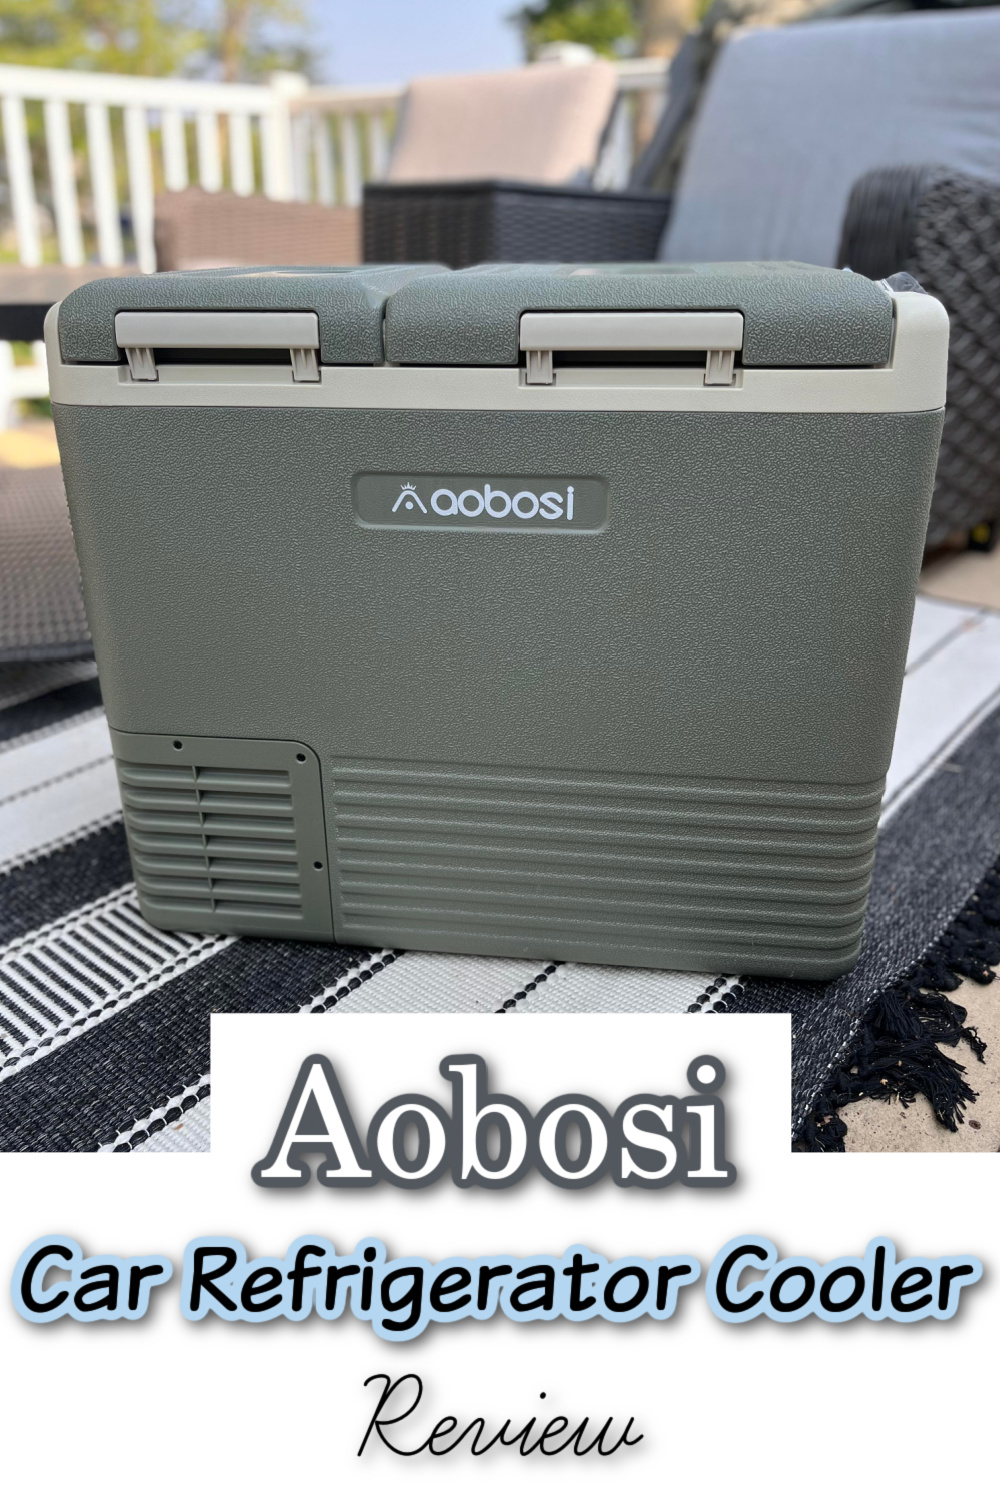 Cooler - Aobosi Car Refrigerator Cooler Review